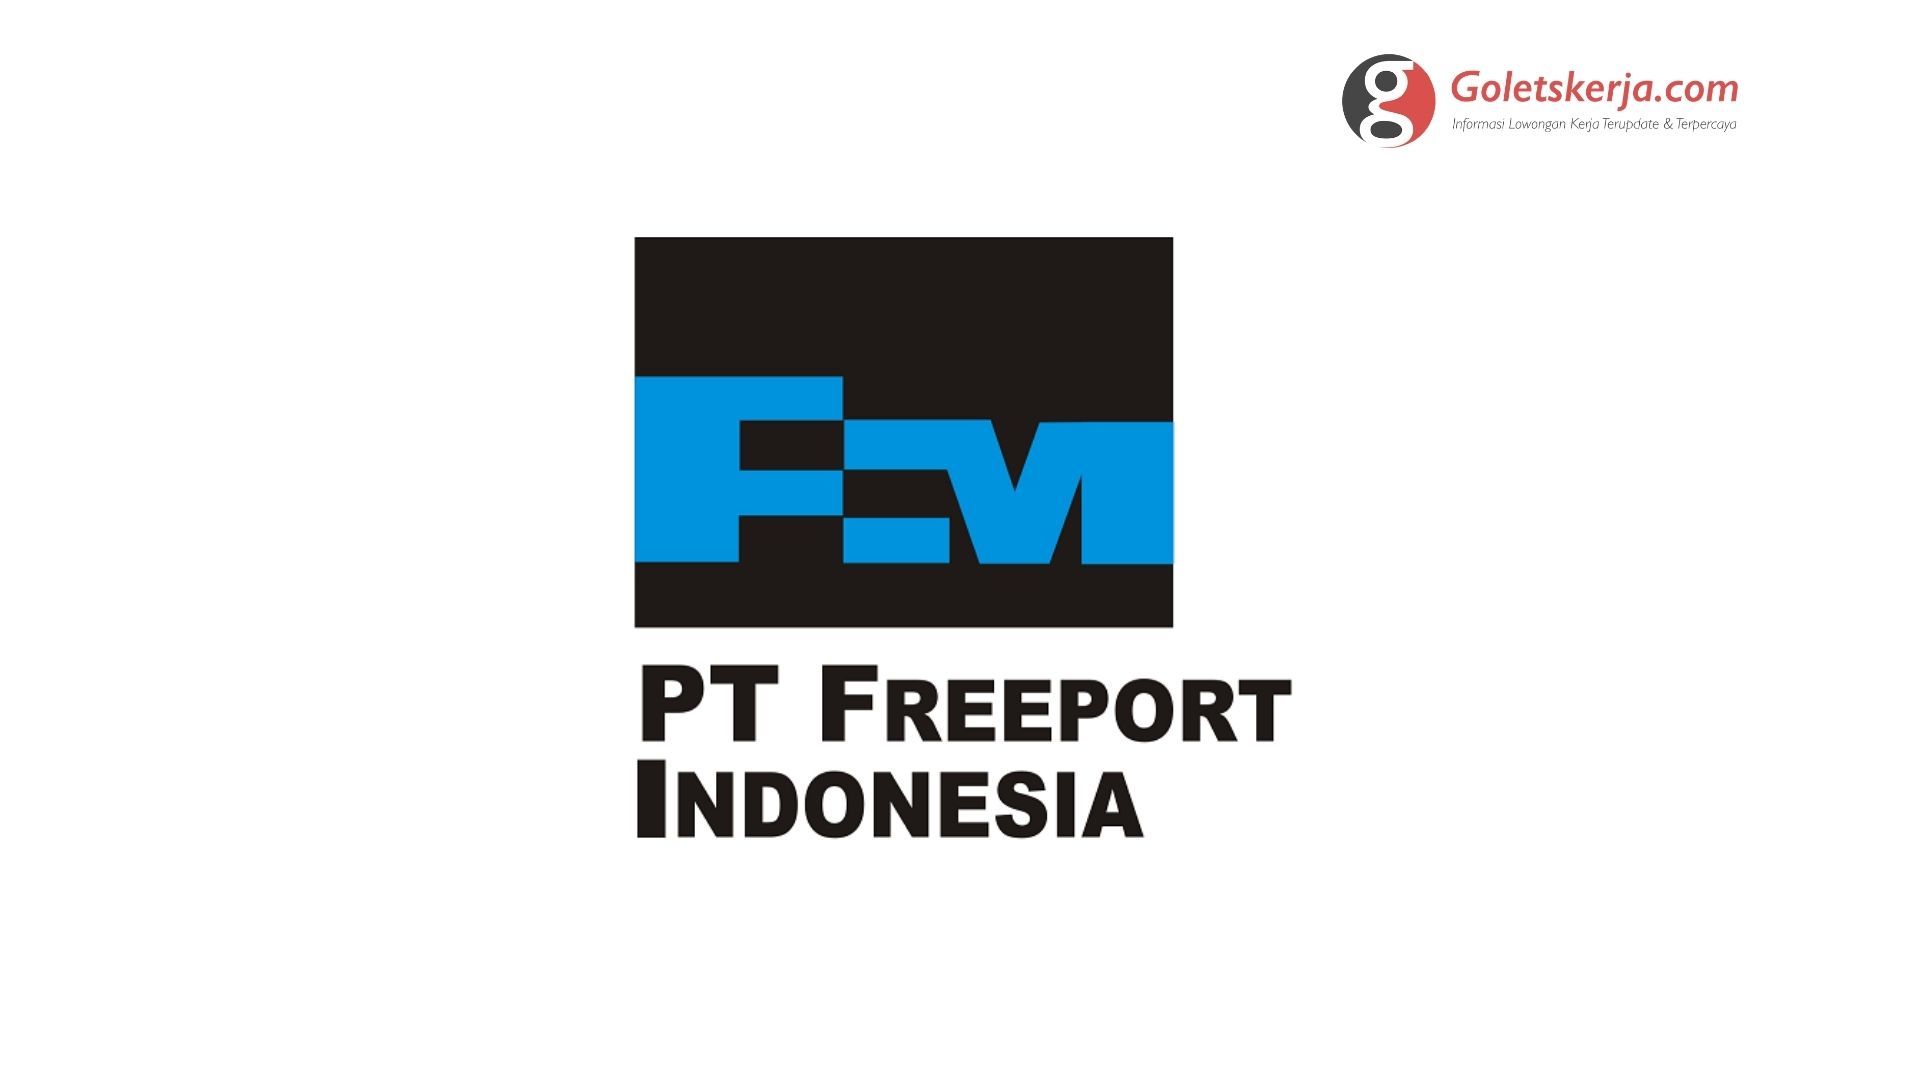 Fresh Graduates Program PT Freeport Indonesia